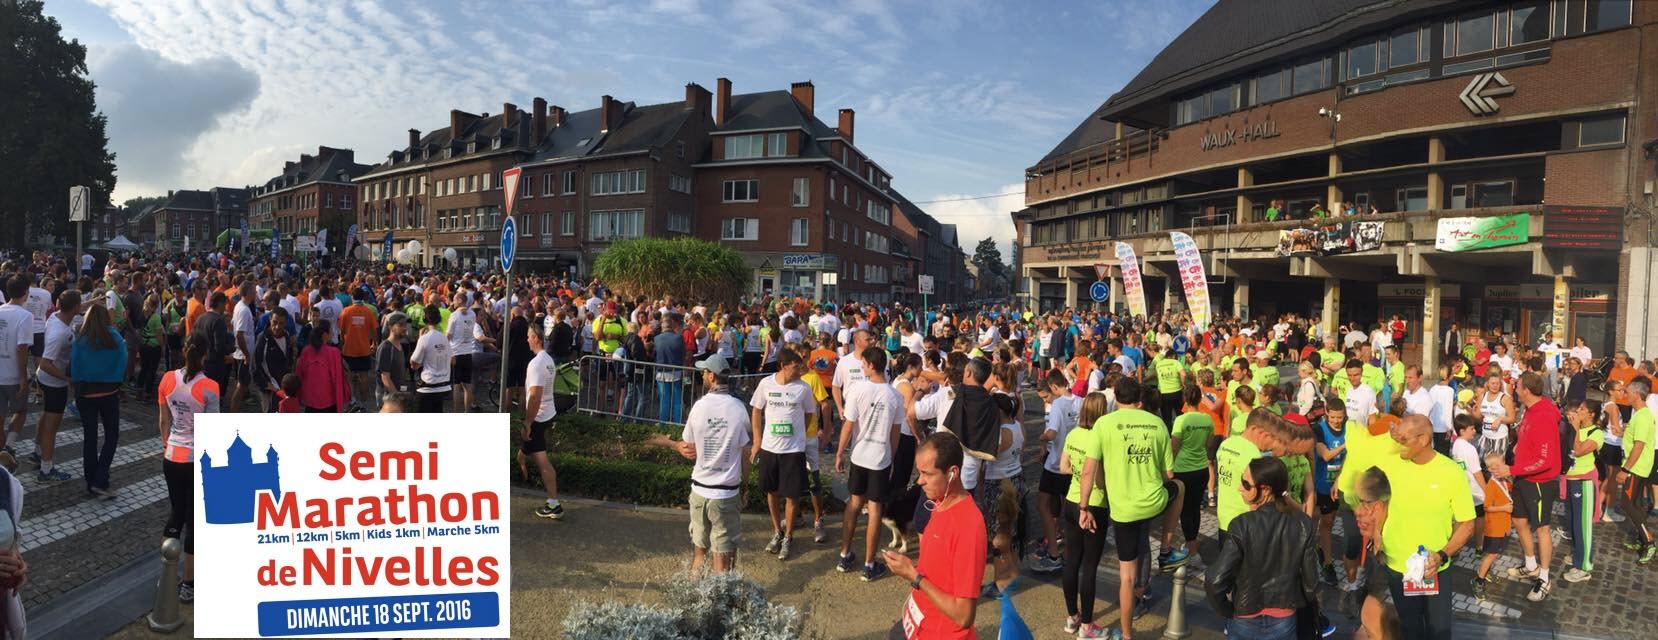 Semi marathon - Nivelles 2016